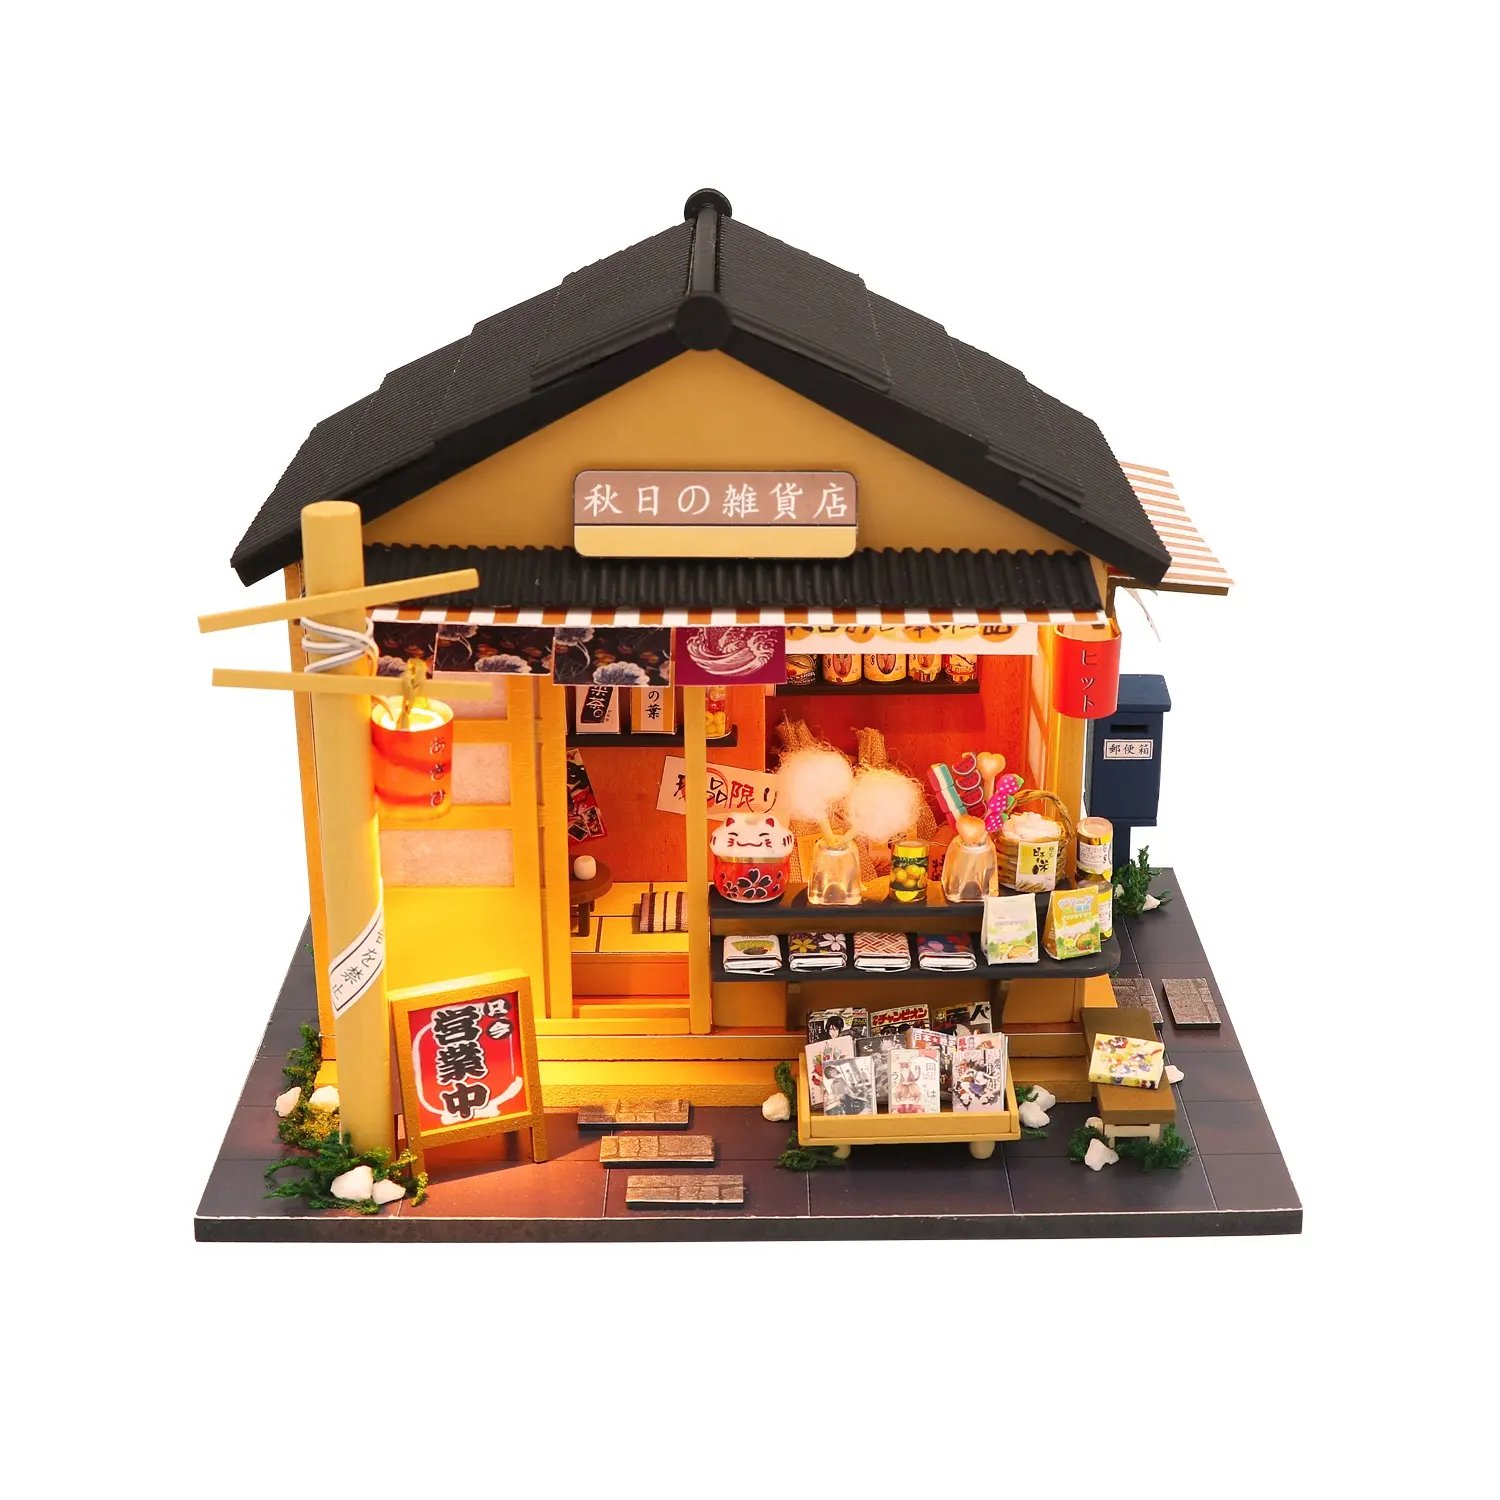 Supply to DIY parent-children handmade shop dollhouse miniature Grocery Store